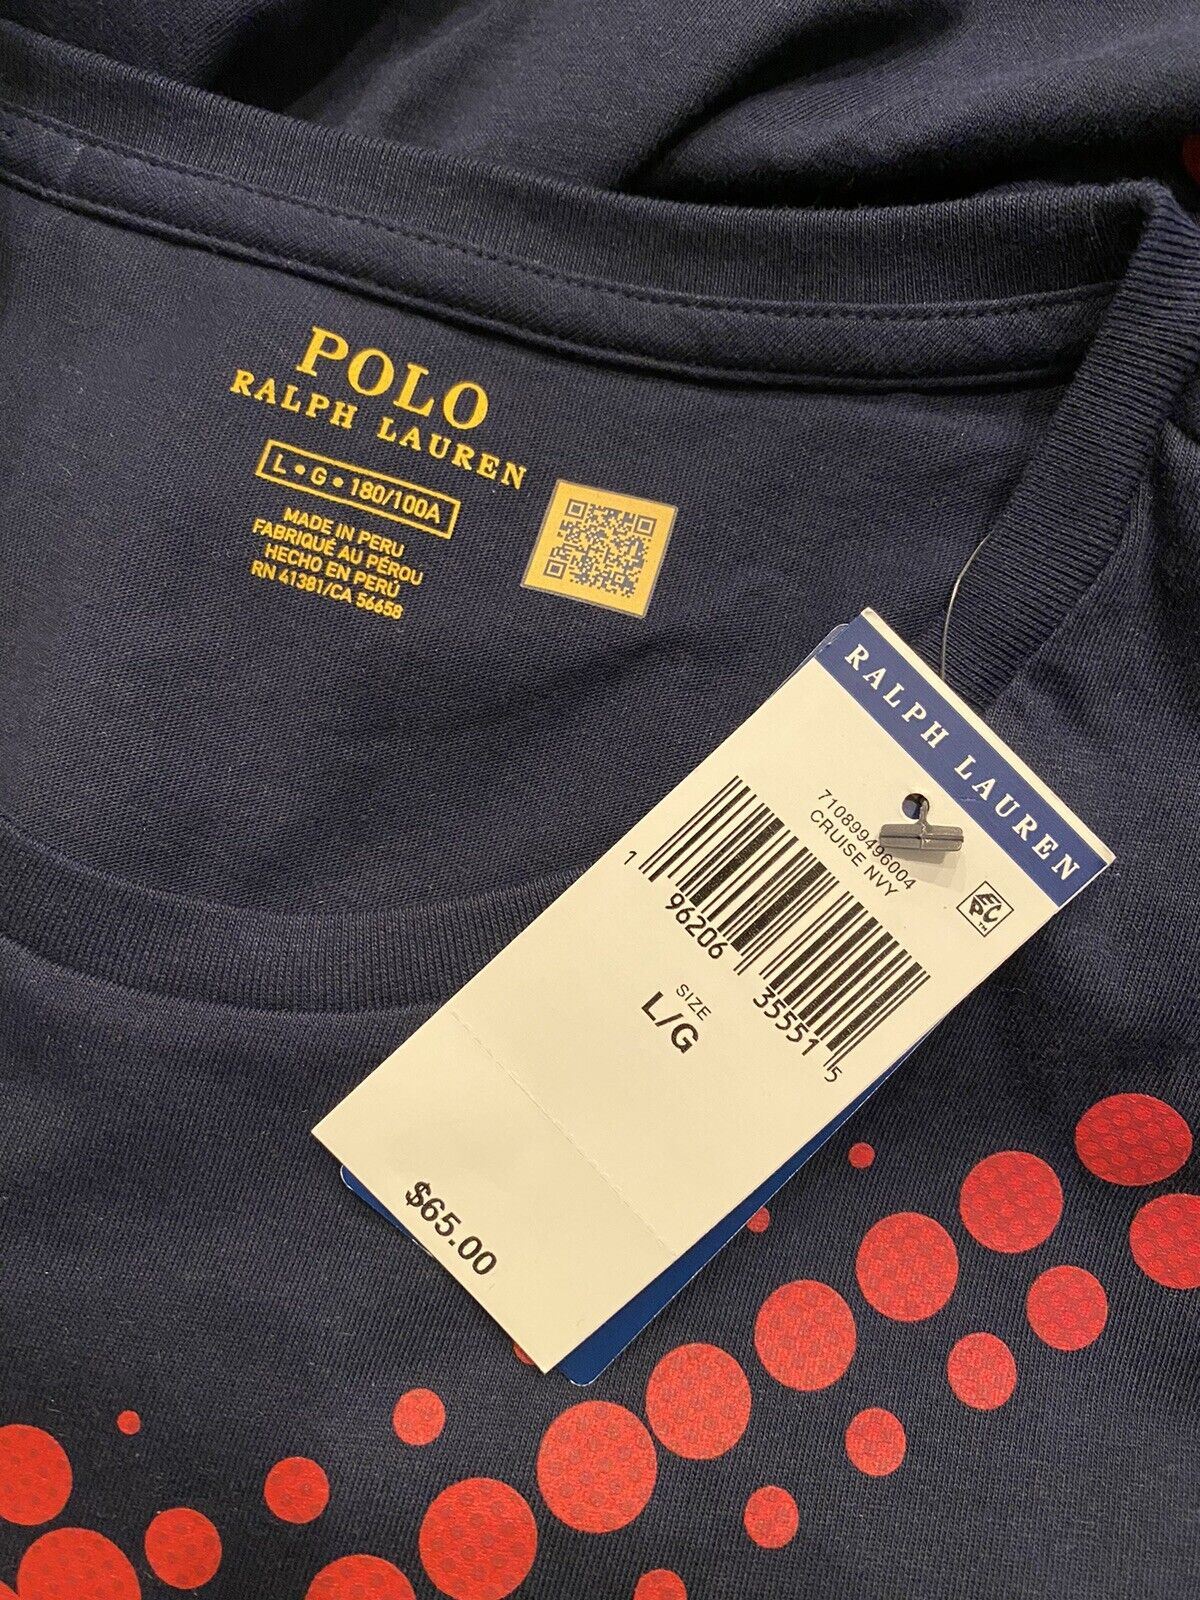 Neu mit Etikett: 65 $ Polo Ralph Lauren Kurzarm-Logo-T-Shirt Blau Large 